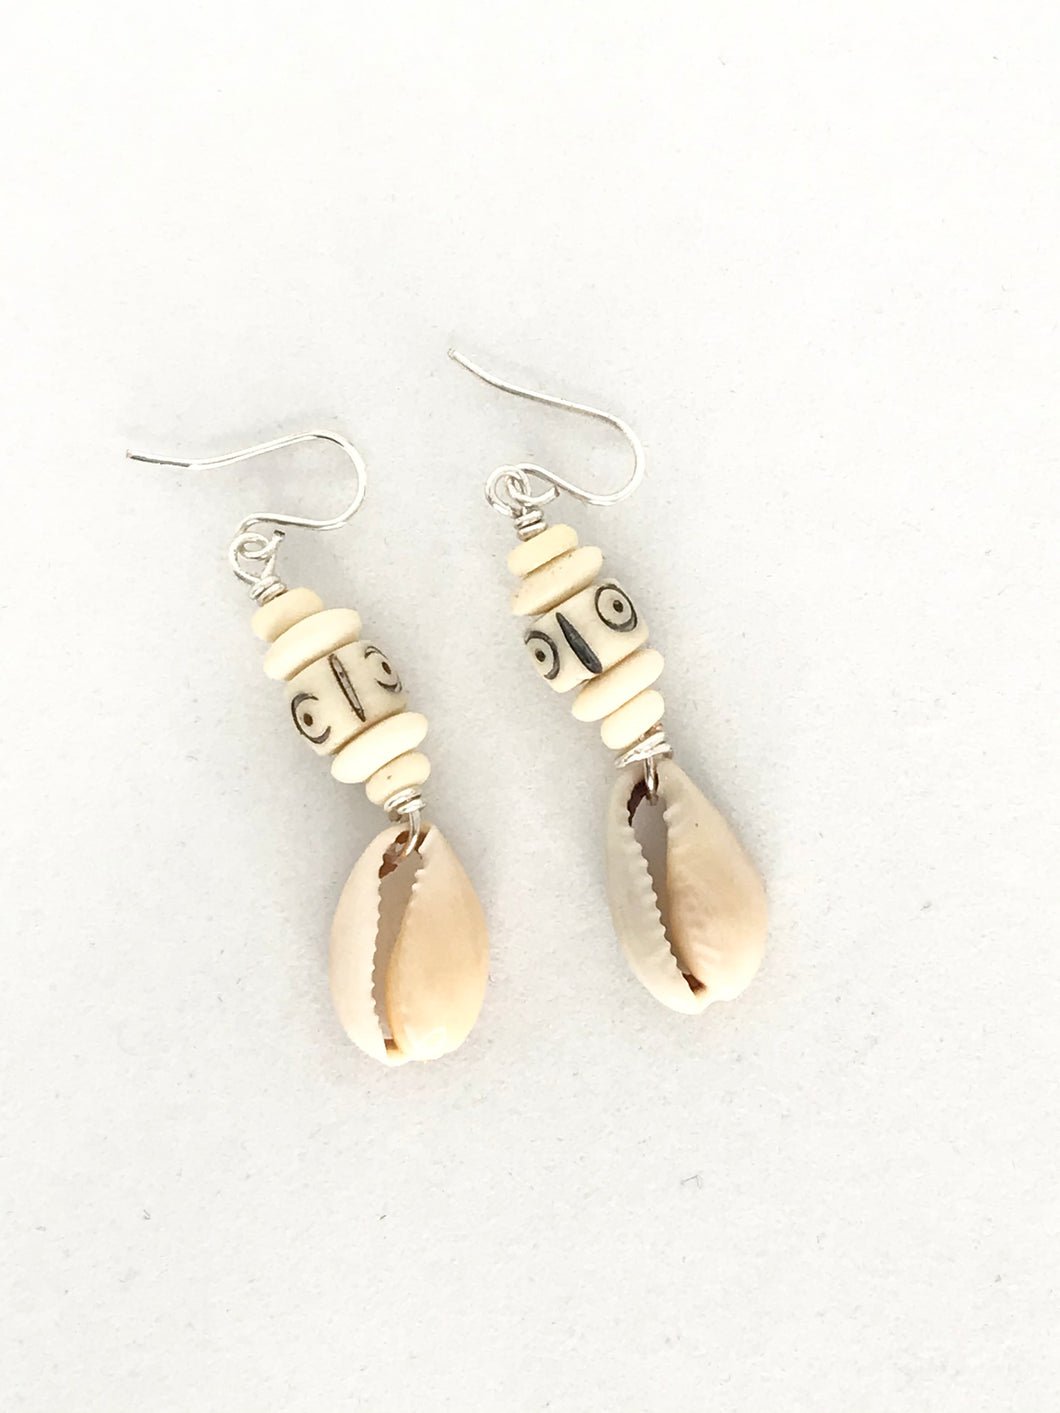 Bone and Cowrie Shell earrings